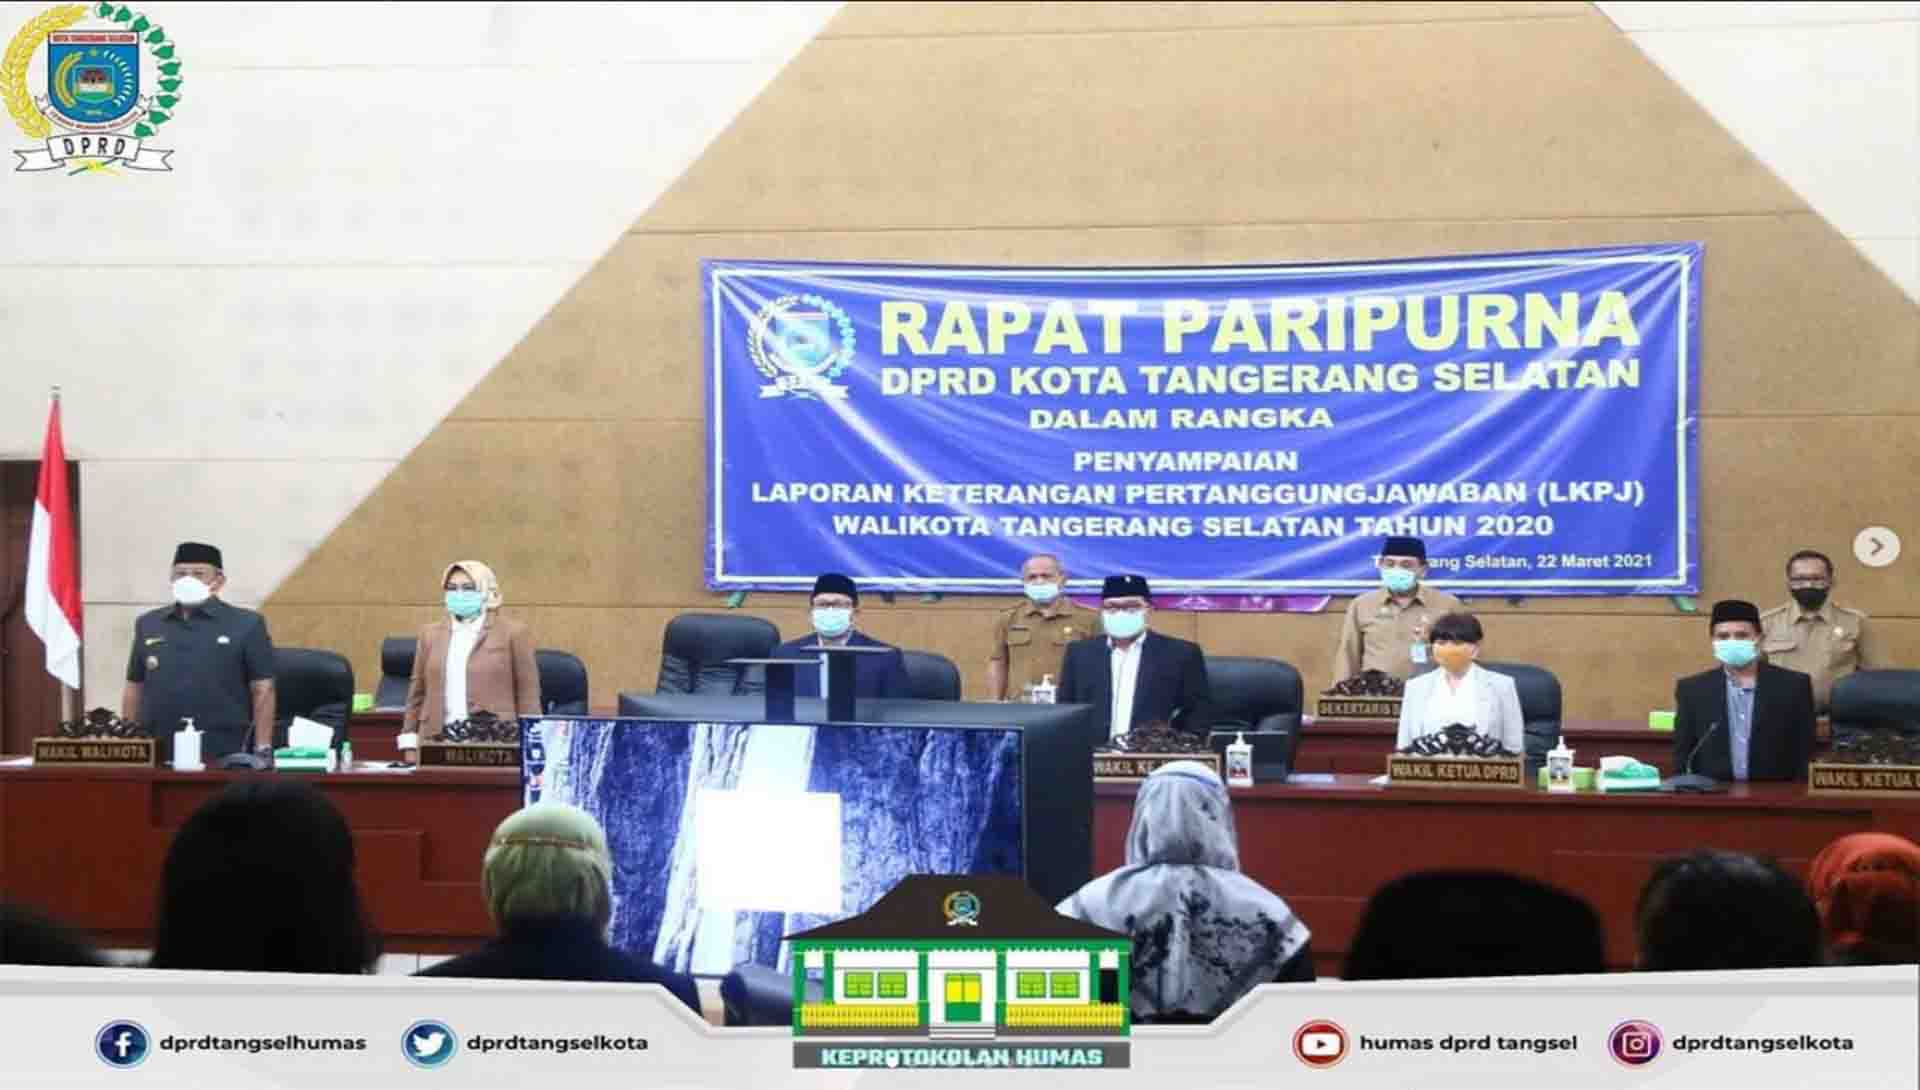 Rapat Paripurna Agenda LKPJ Walikota Tangerang Selatan Tahun 2020